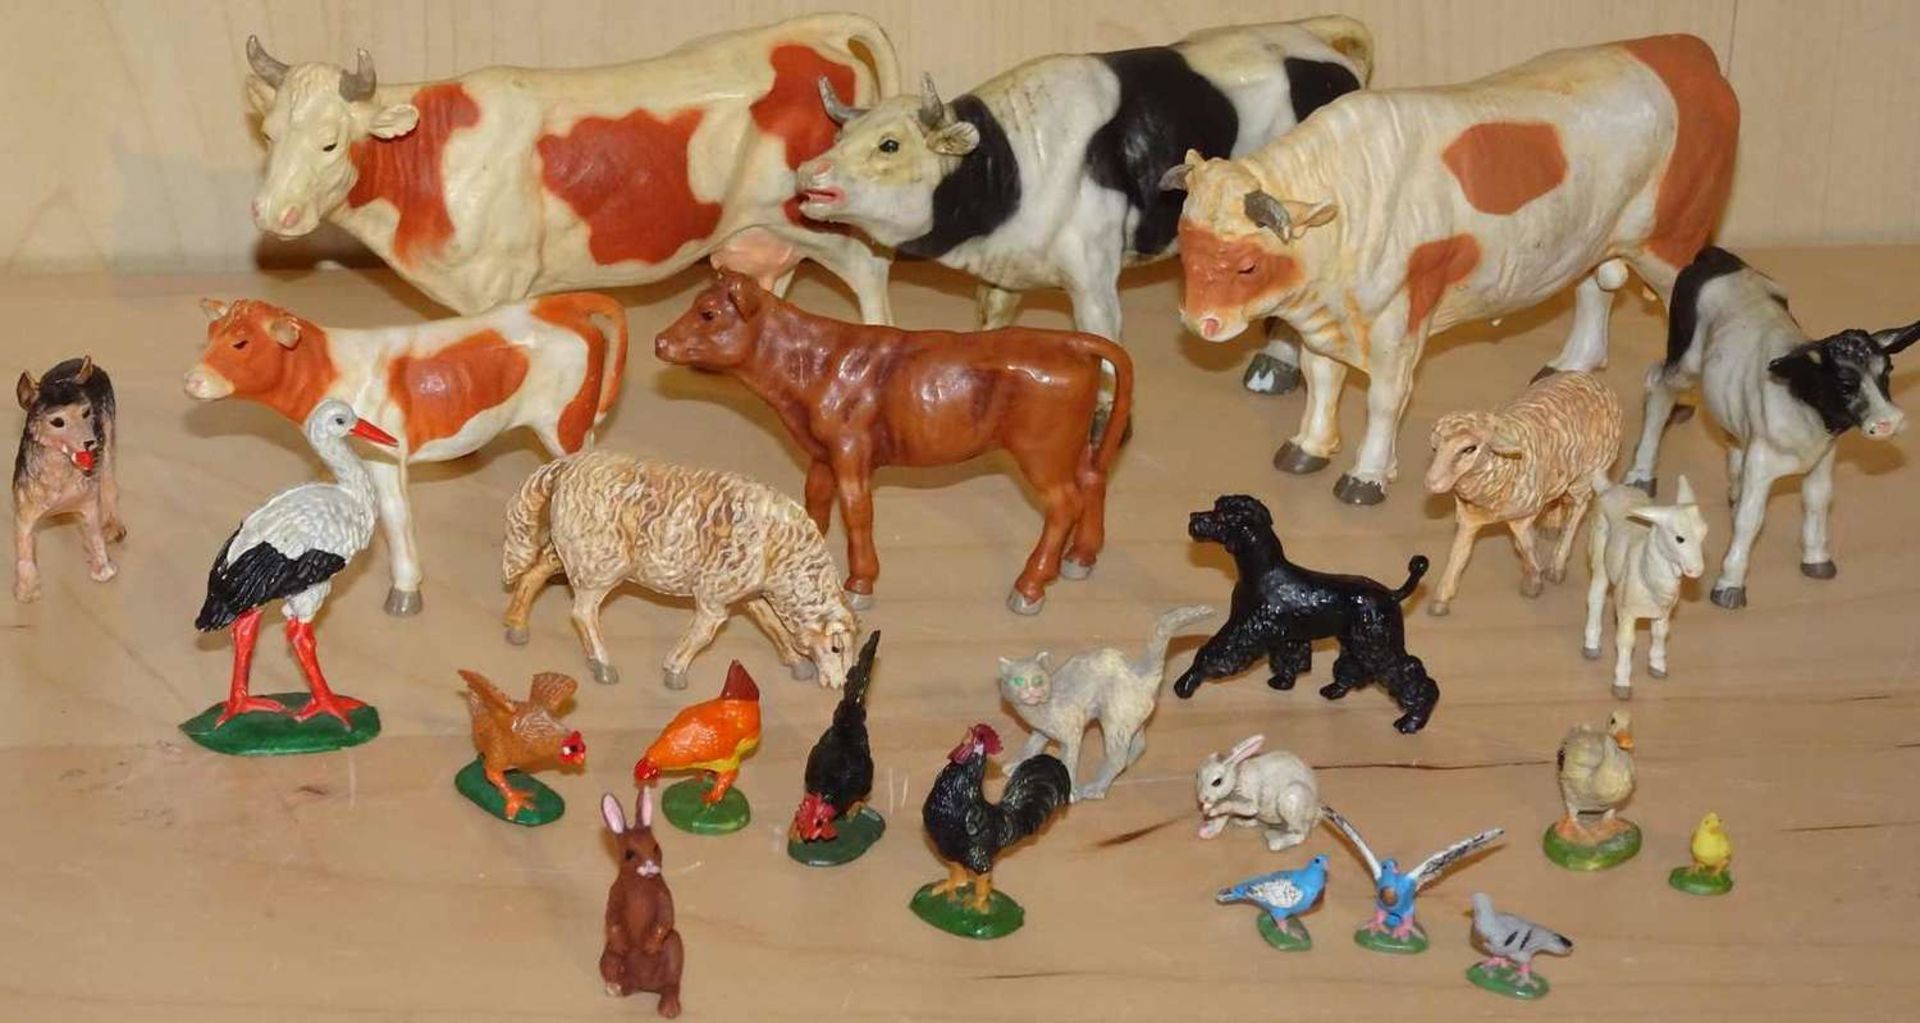 Elastolin Farm animals, plastic, 7 cm series, including cows, dog, rabbit, cat, chick, etc. A